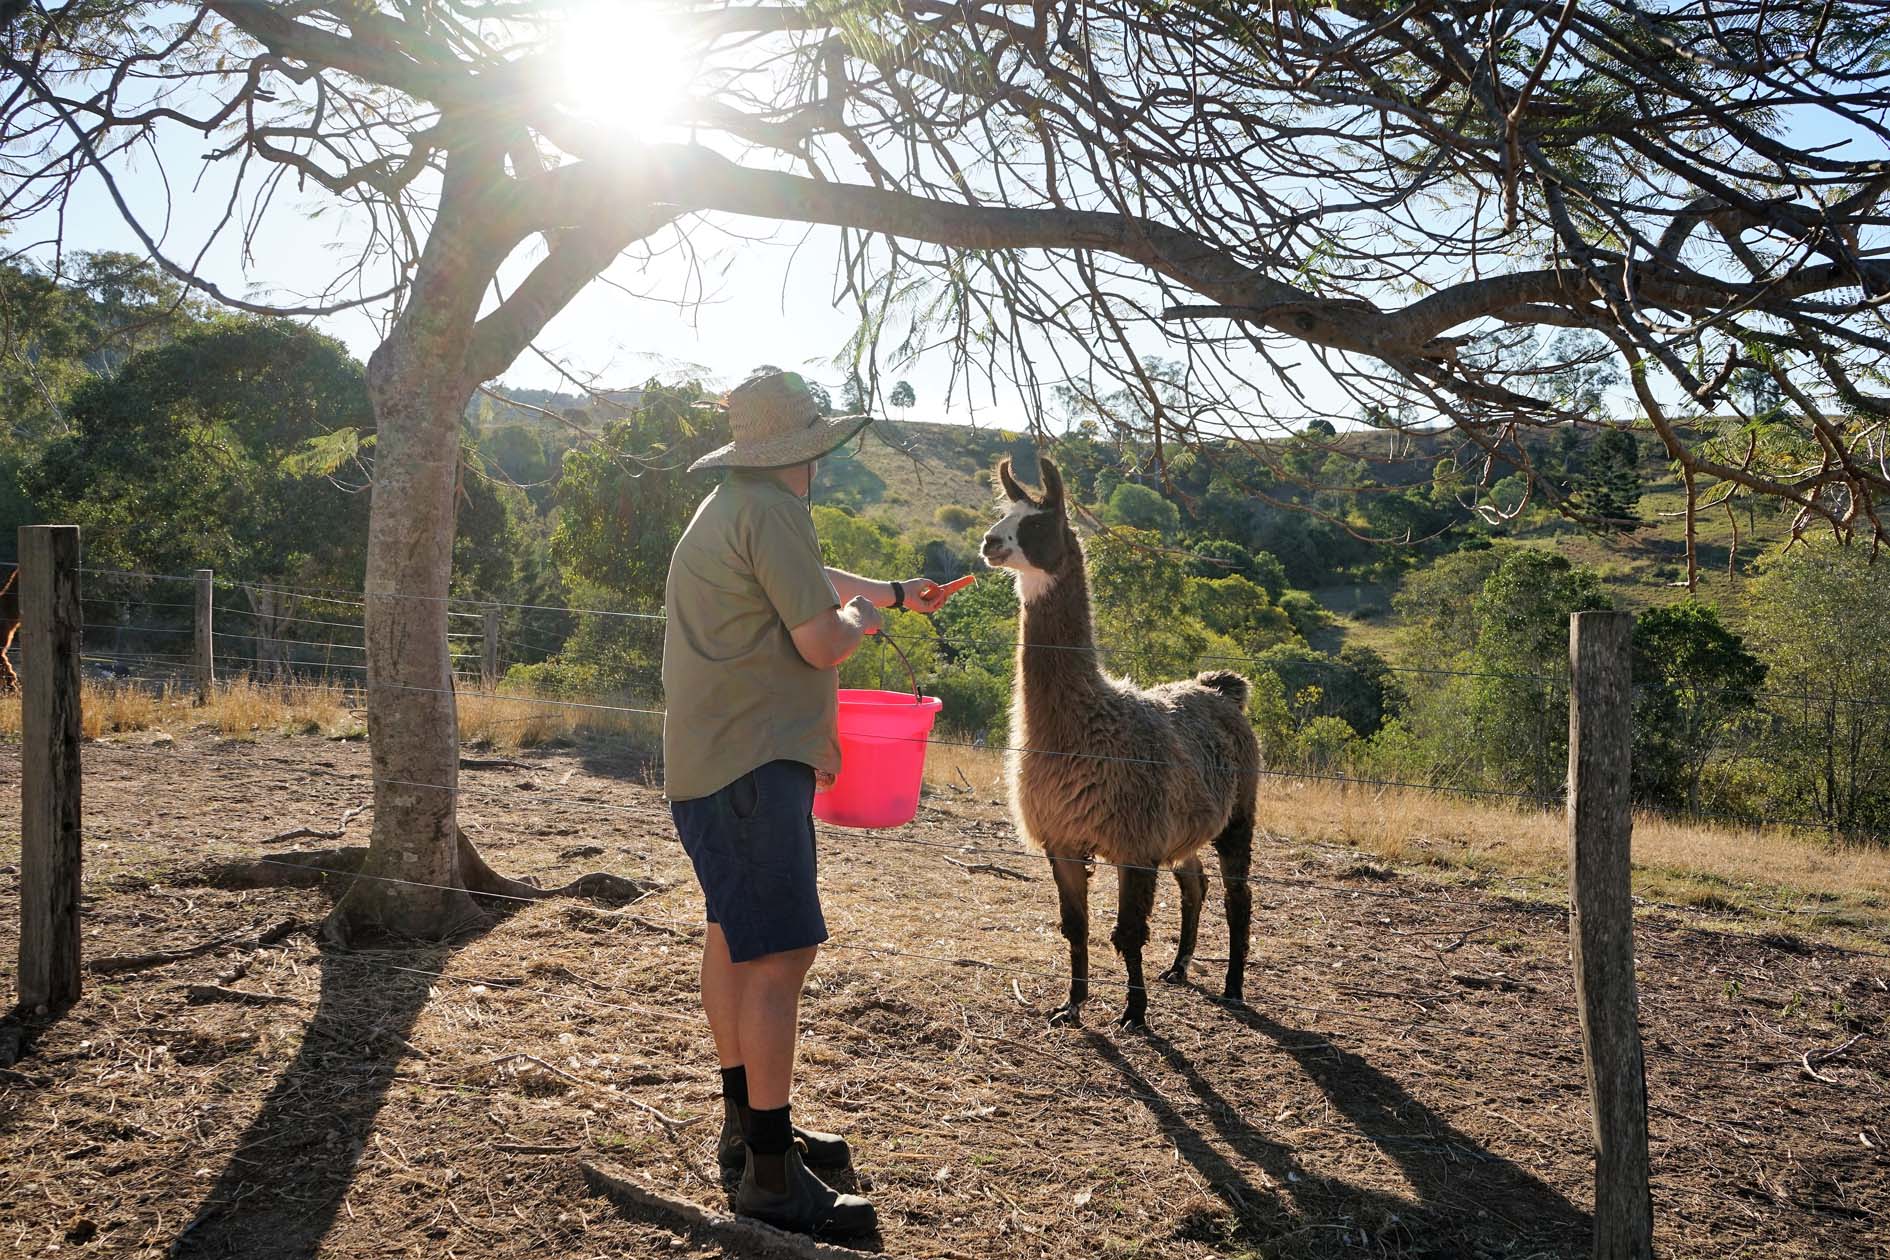 Shane Hancock feeds on the Llamas at the Llama Farm